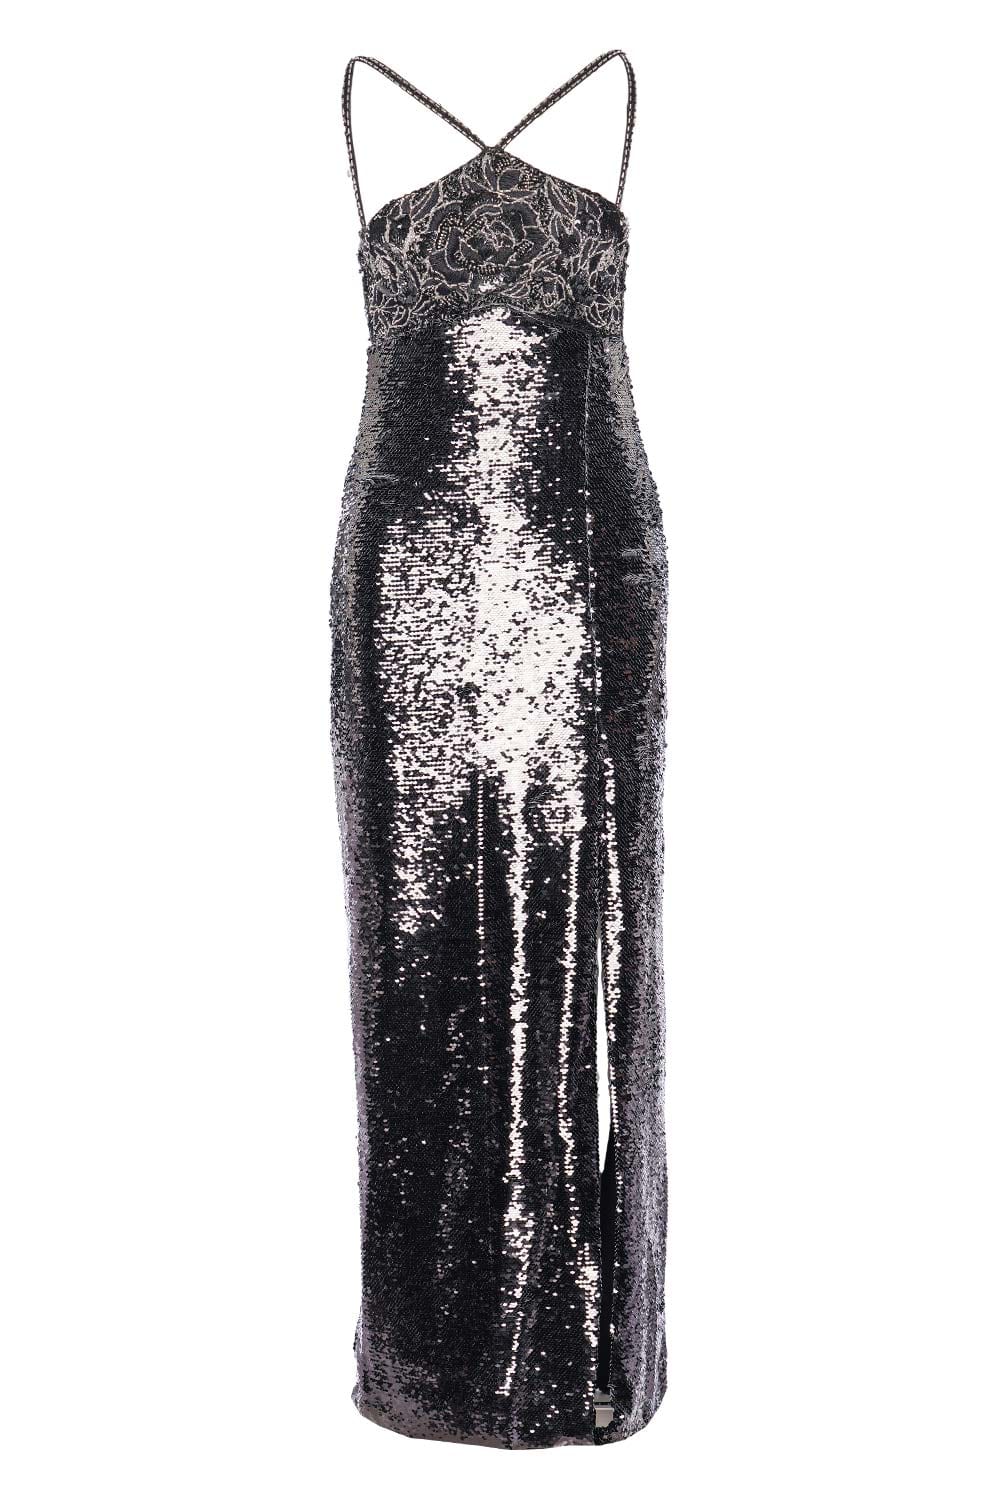 PatBO Black Embroidered Sequin Maxi Dress